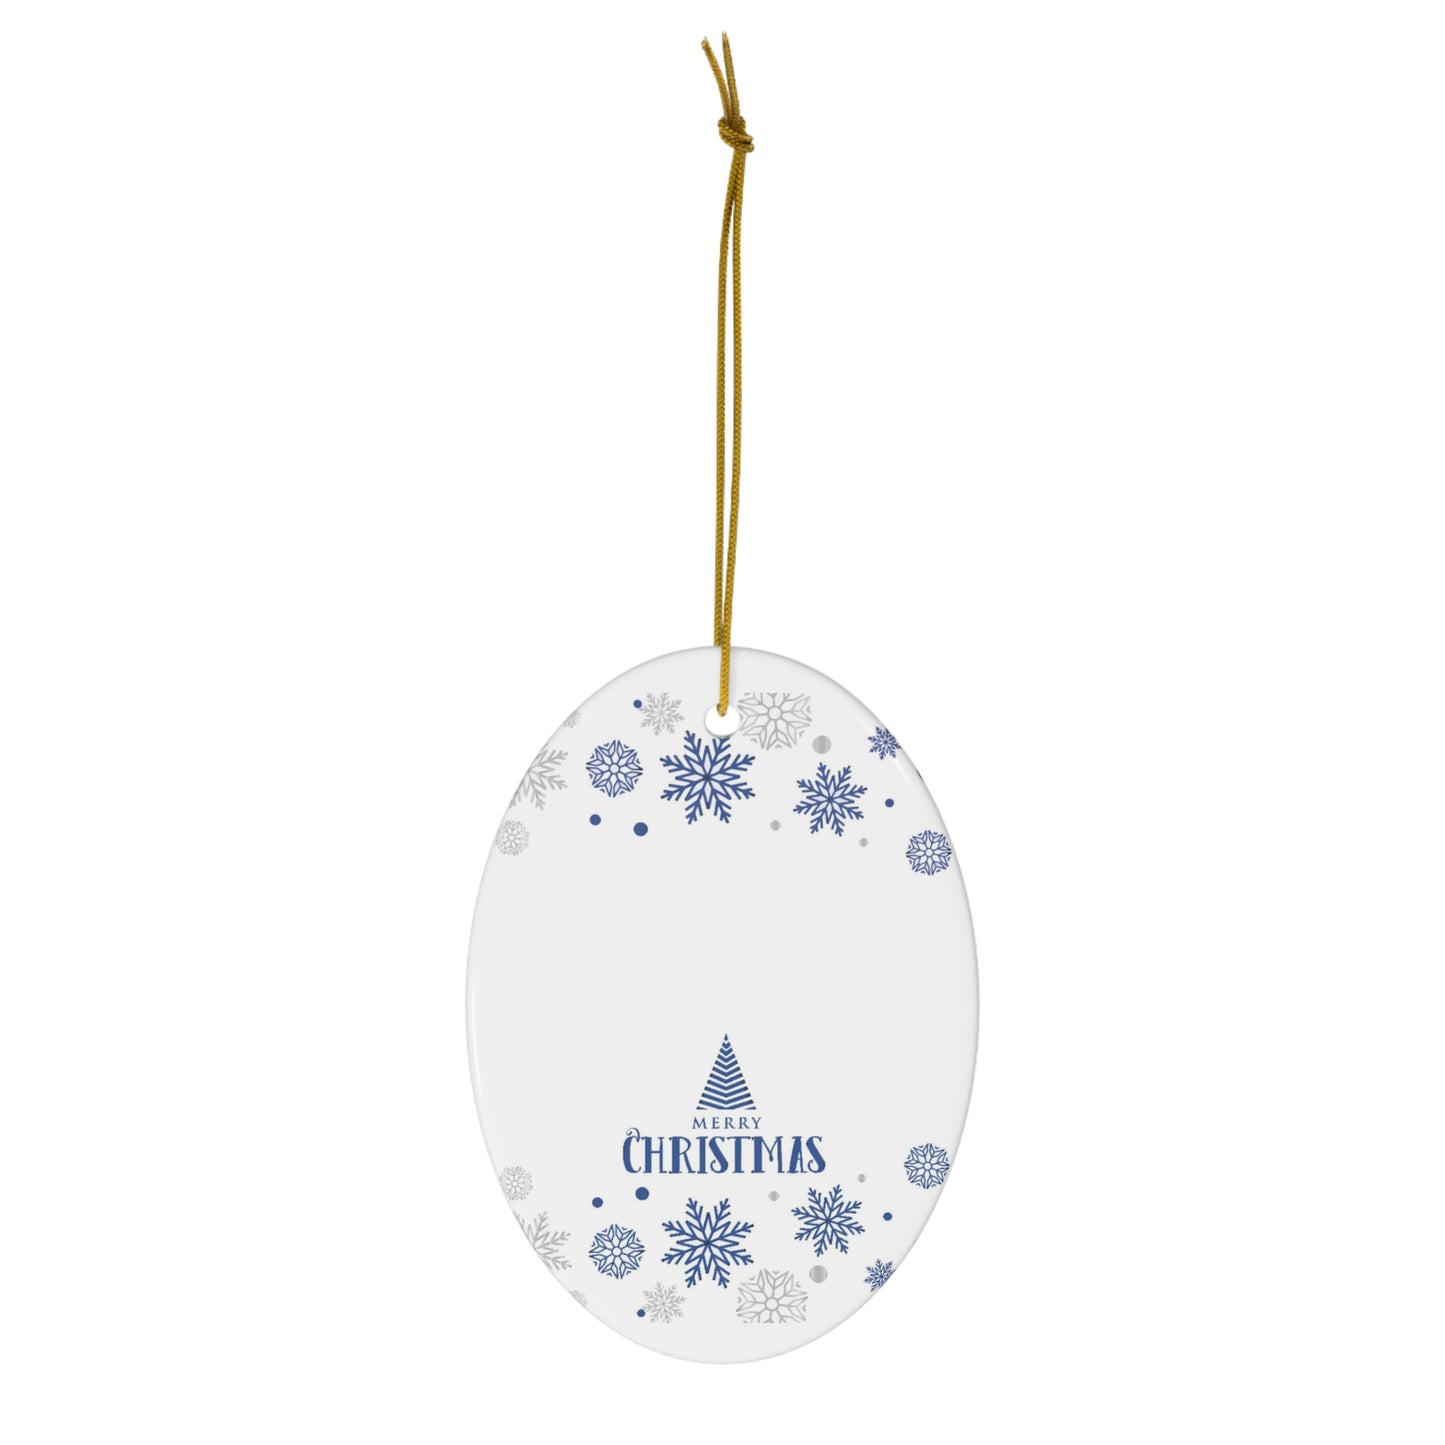 Holiday Ceramic Ornament, 1-Pack, Seasos's Greetings, White